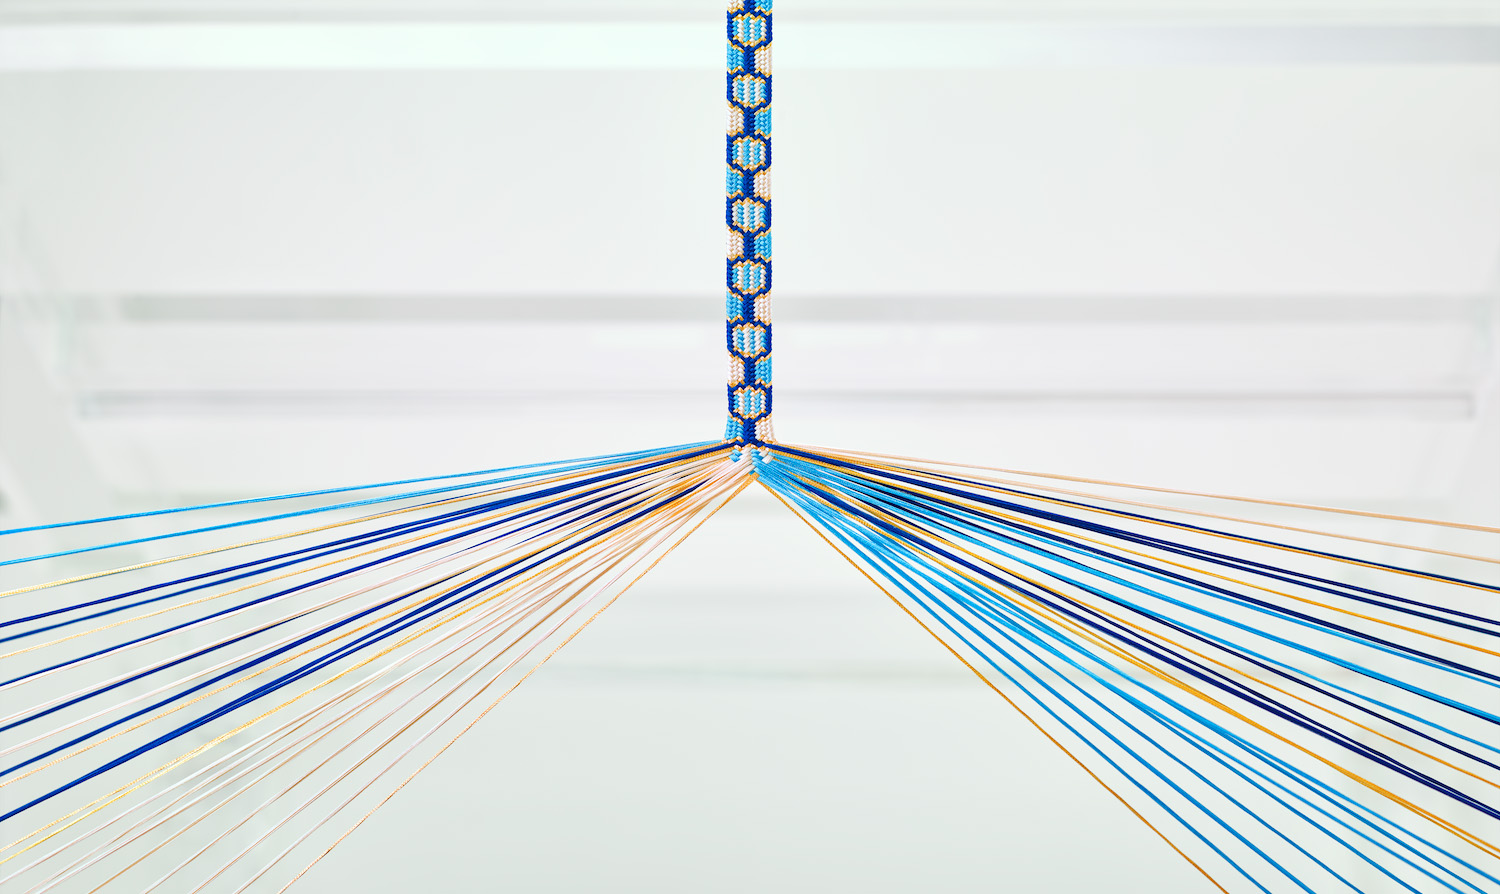 kumihimo silk braiding using blue, white and gold silk threads